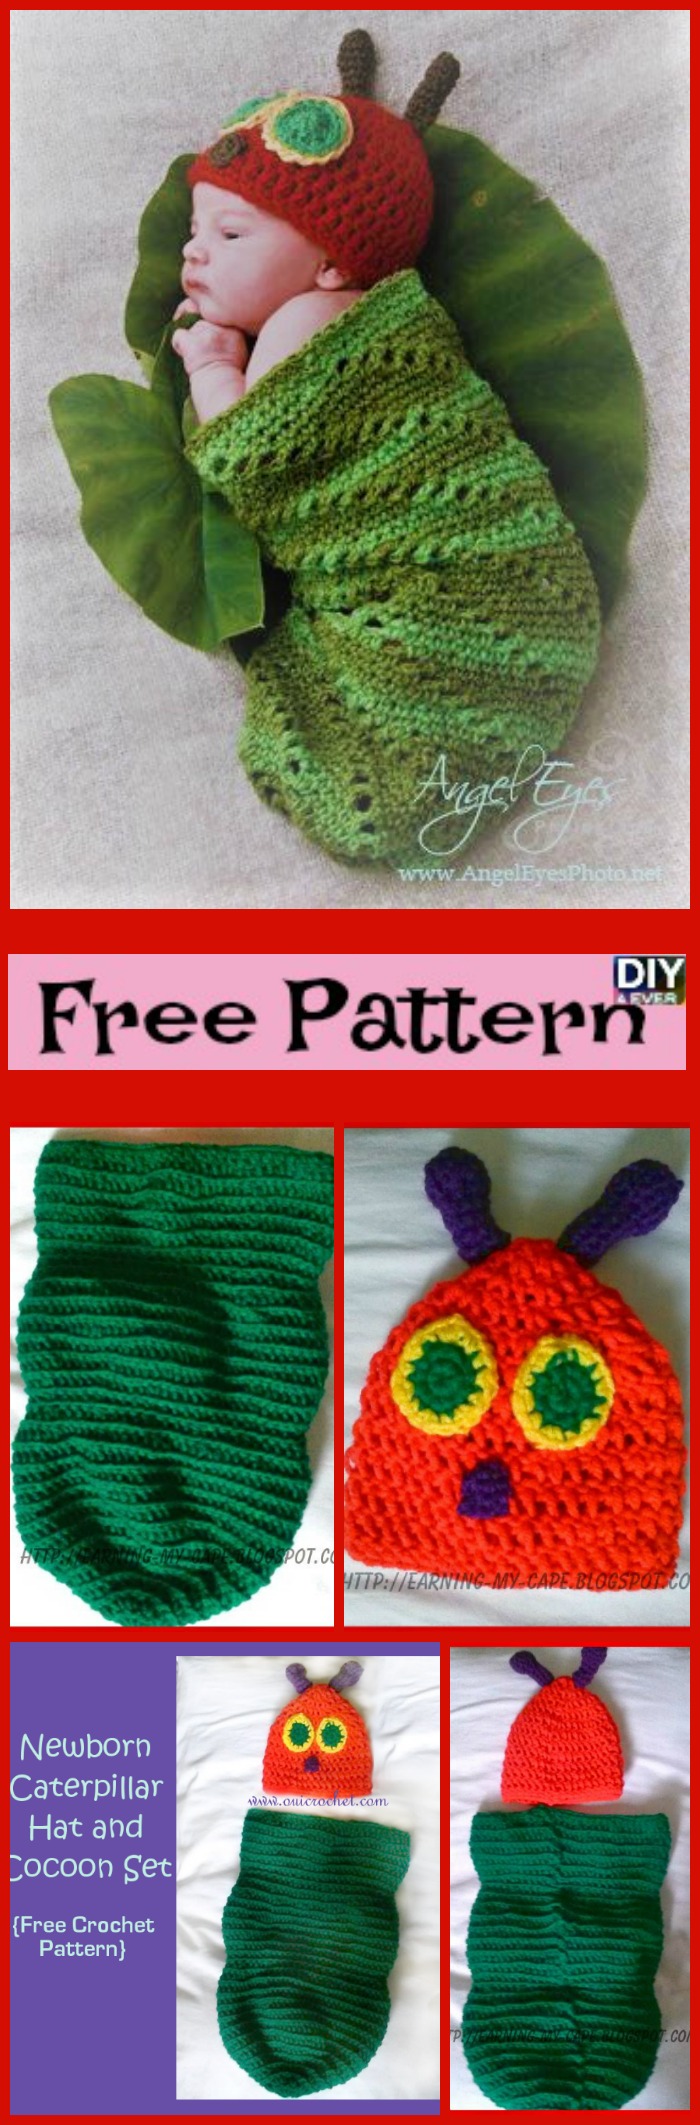 diy4ever- Crochet Caterpillar Hat Cocoon Set - Free Pattern 